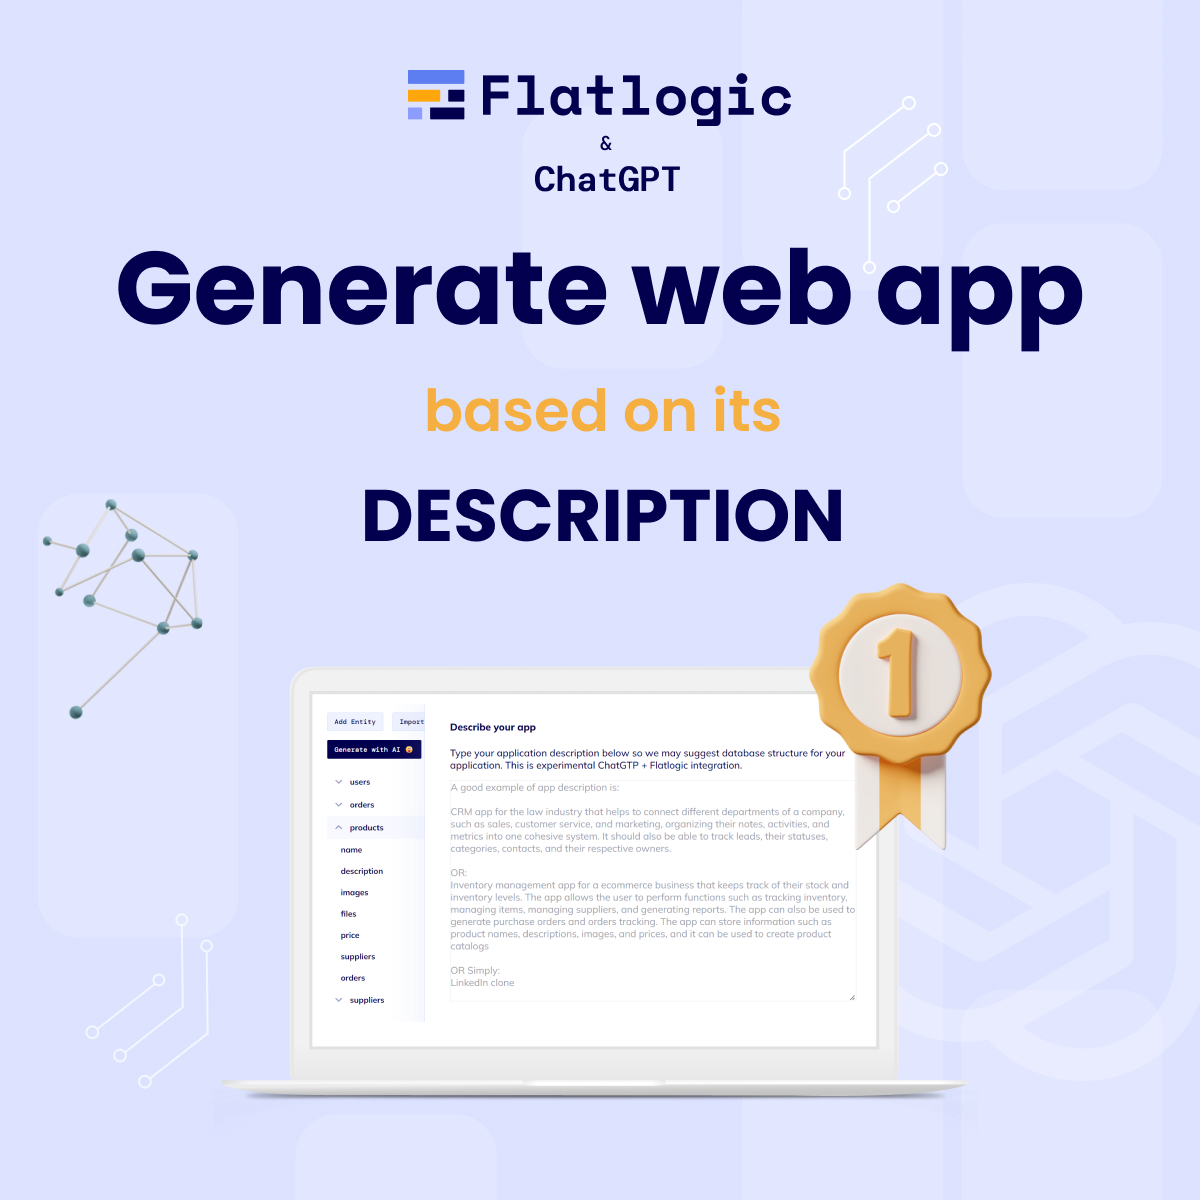 ChatGPT + Flatlogic: Generate Fully-Functioning Web Apps Based on Description